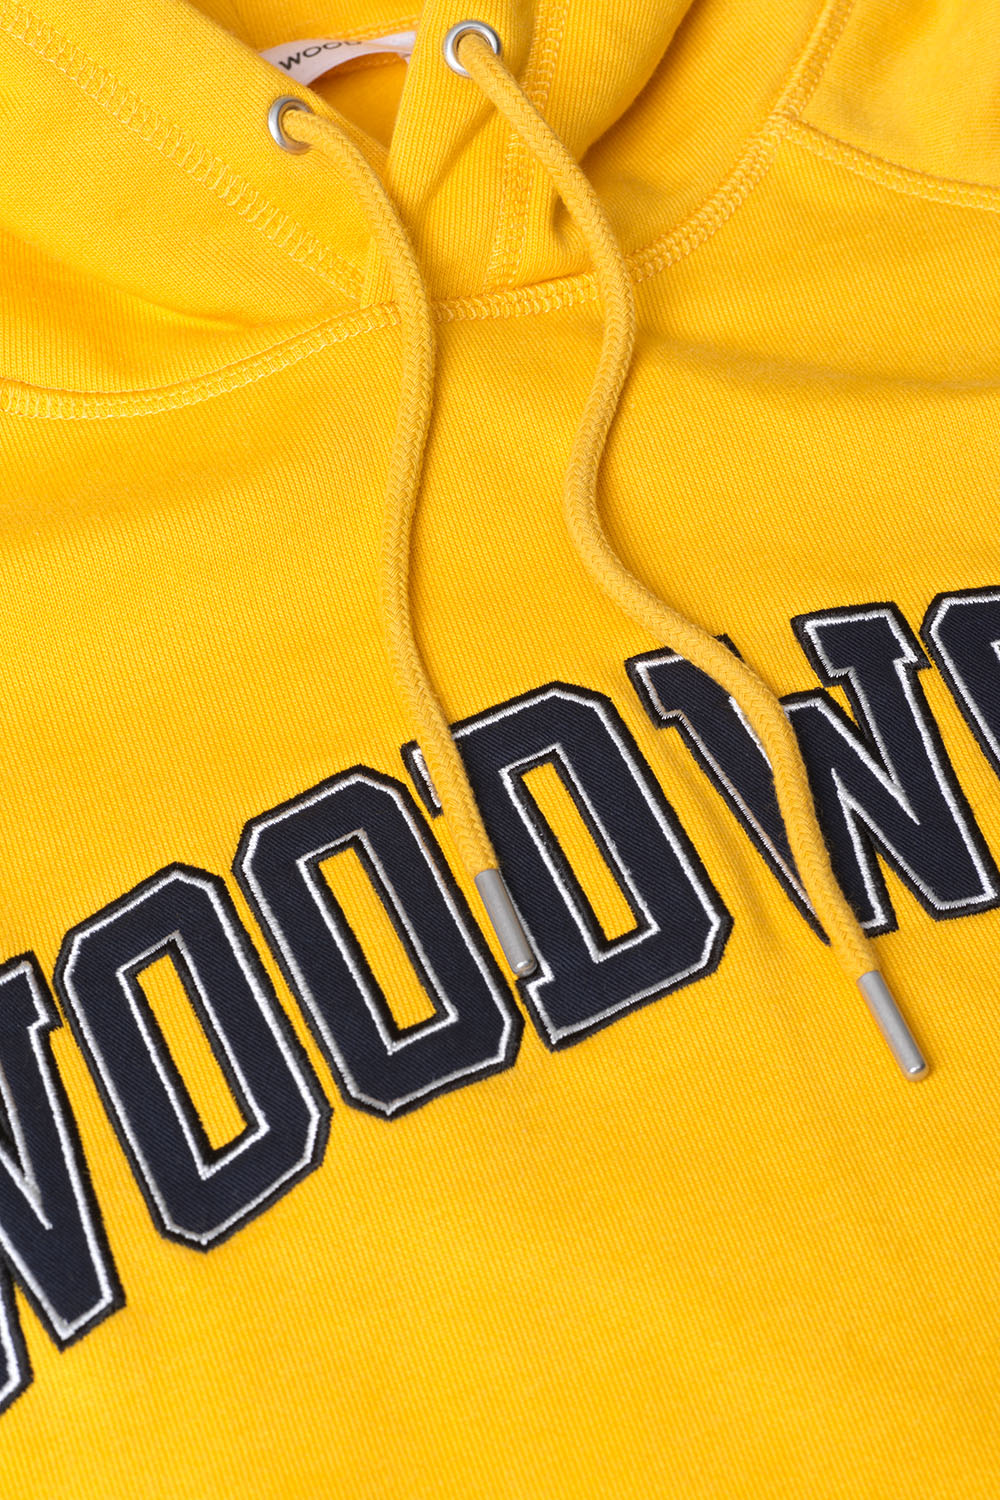 Wood Wood Fred IVY Hoodie Yellow- 12215617-2493